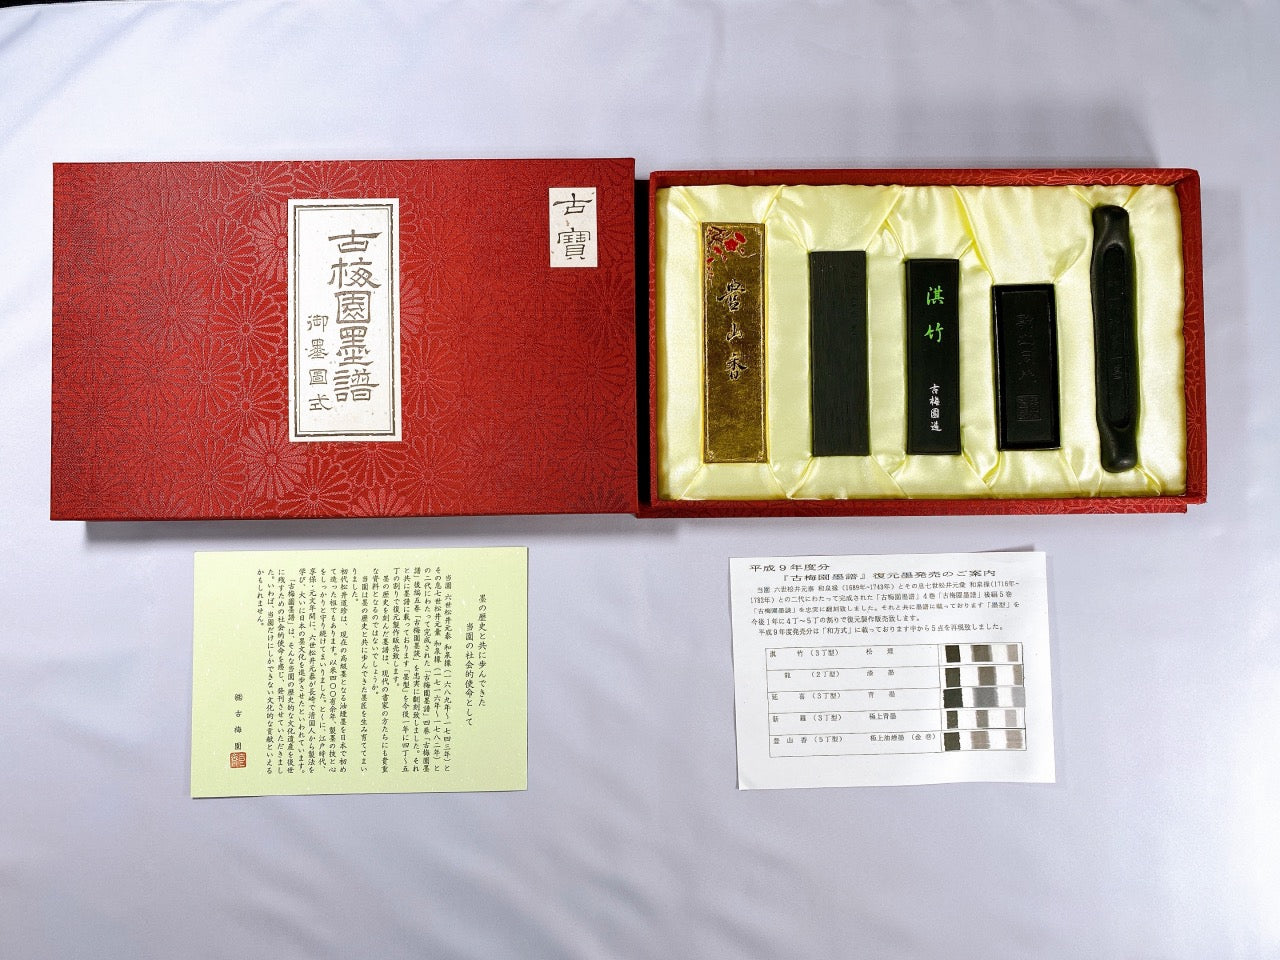 Bokufu 1997 - Kobaien's special inkstick year selection ( 古梅園墨譜1997 )